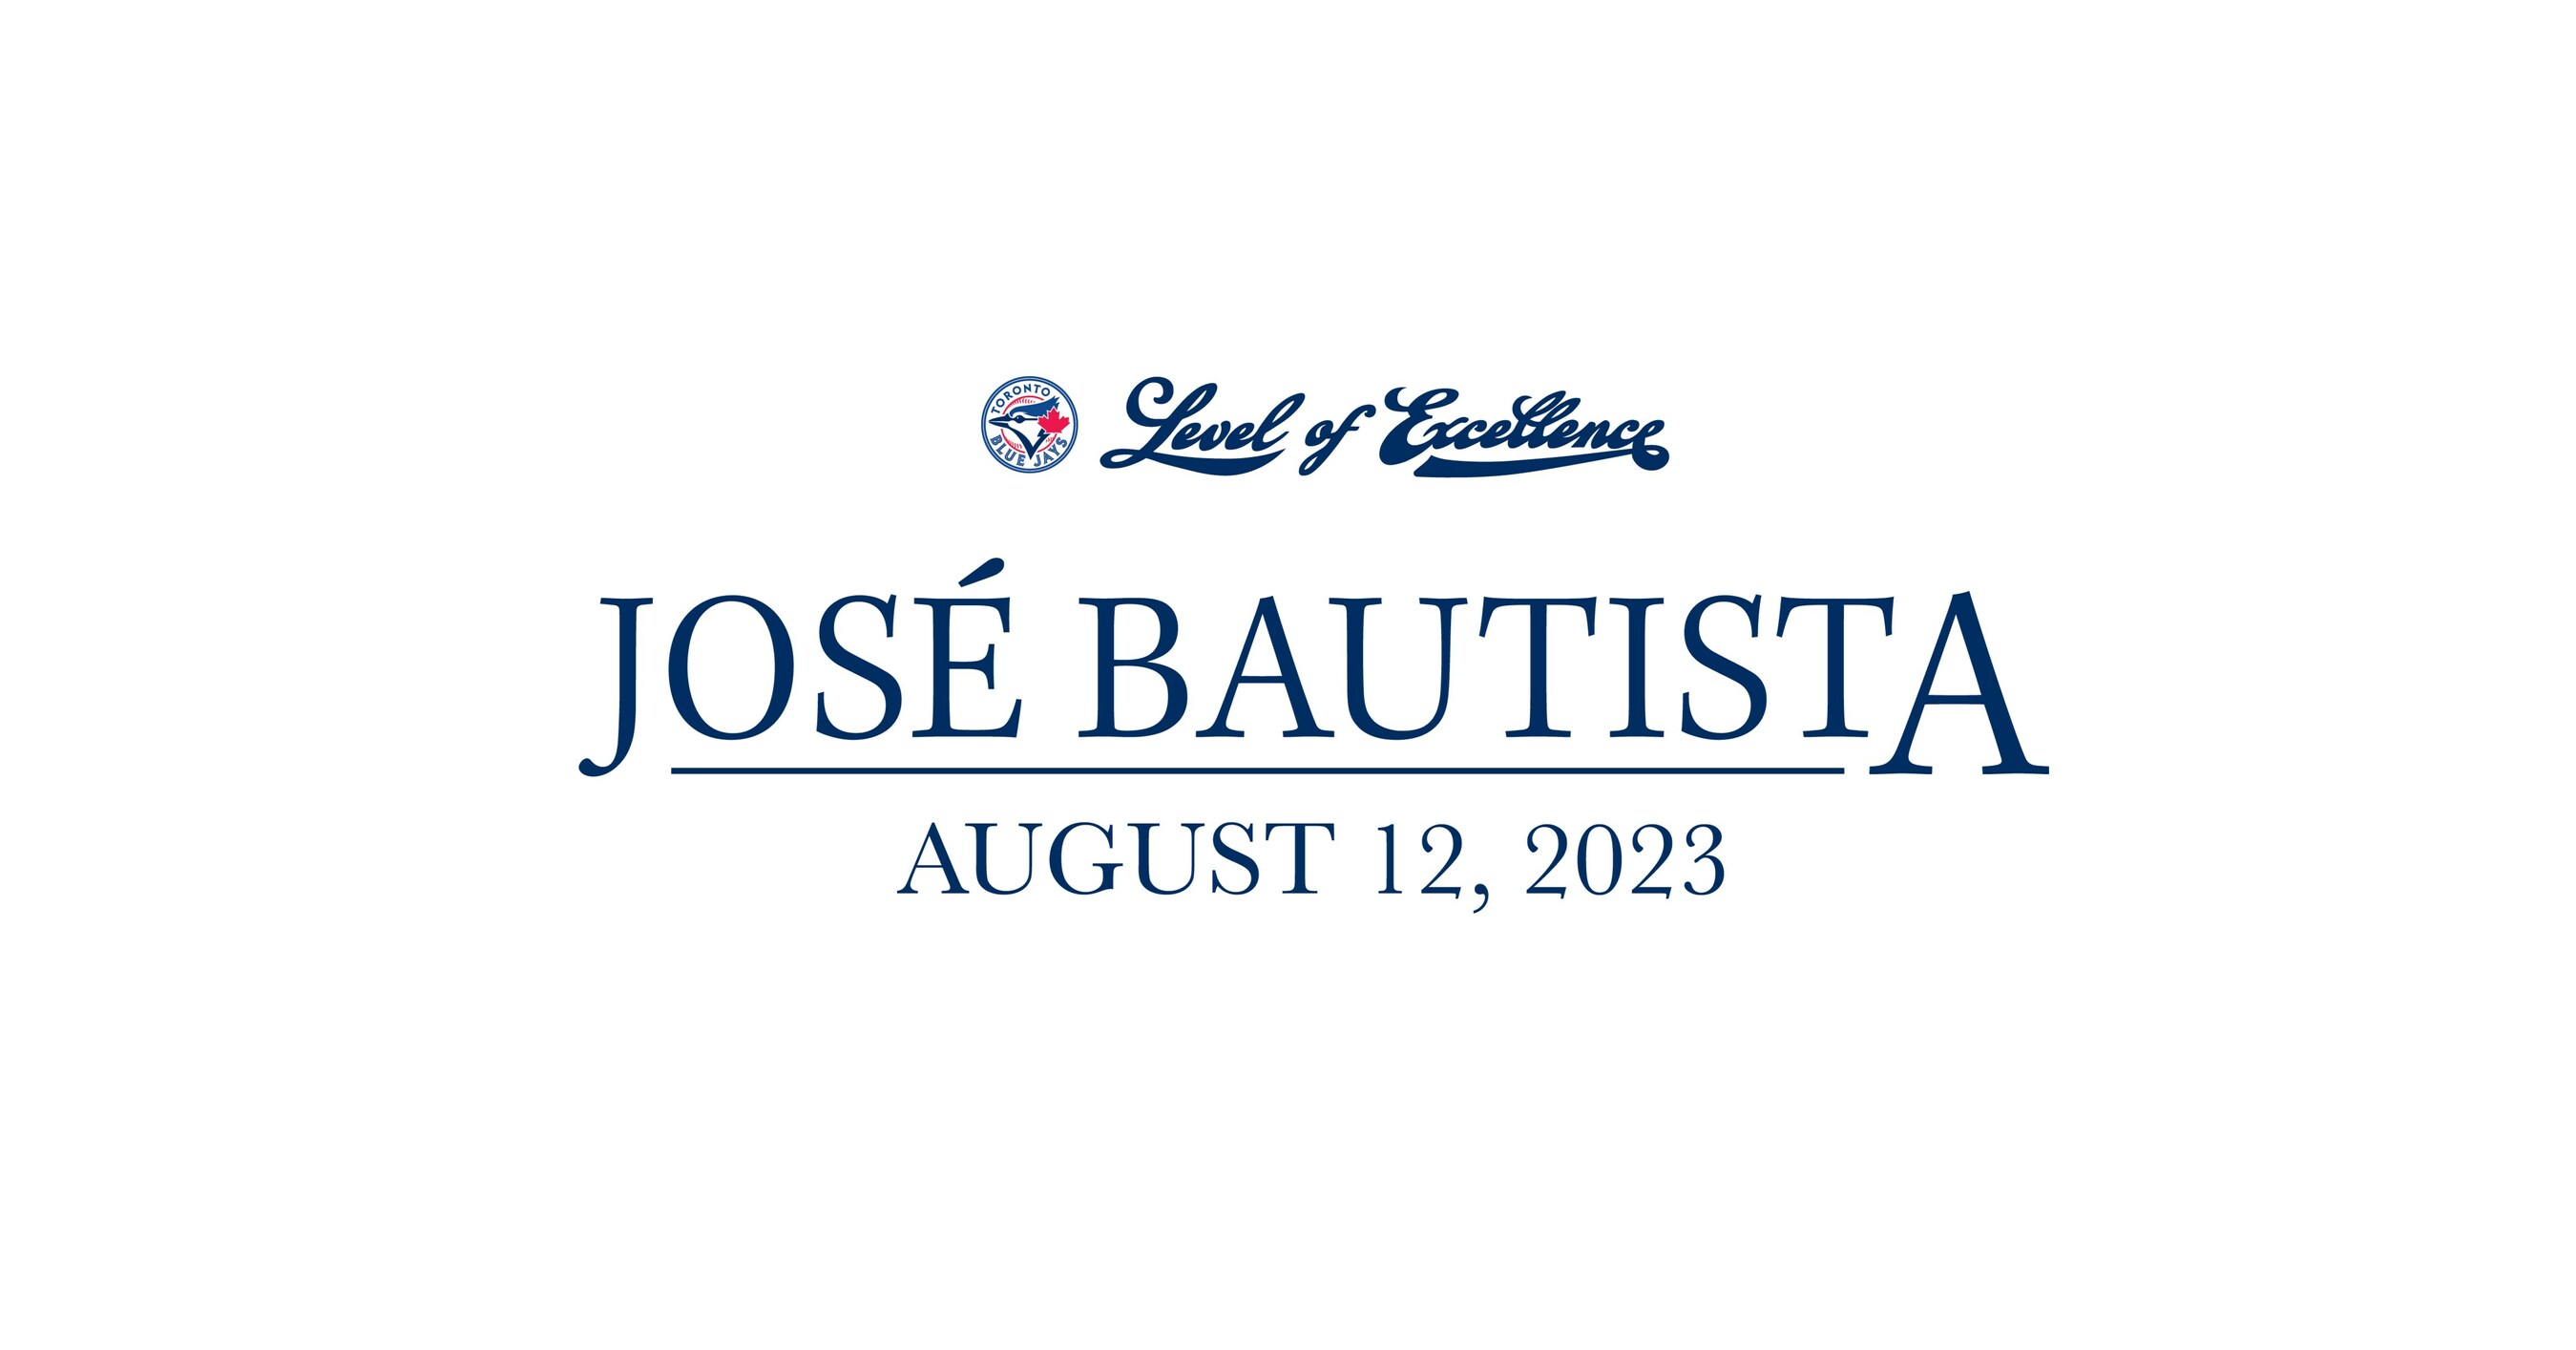 Former Blue Jays icon Jose Bautista hasn't considered retirement